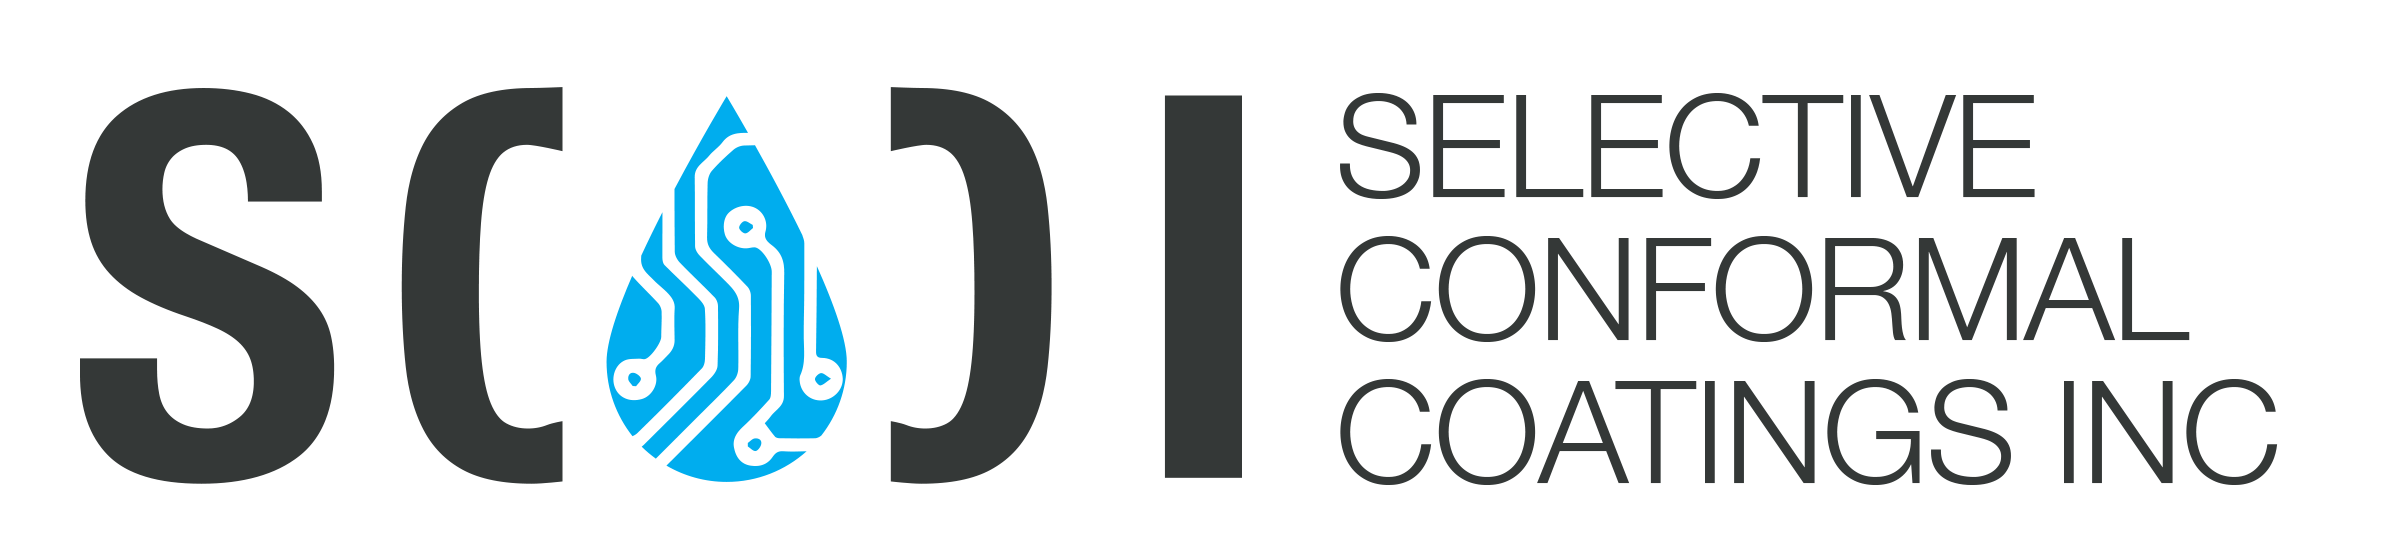 Selective Conformal Coatings Inc. Logo